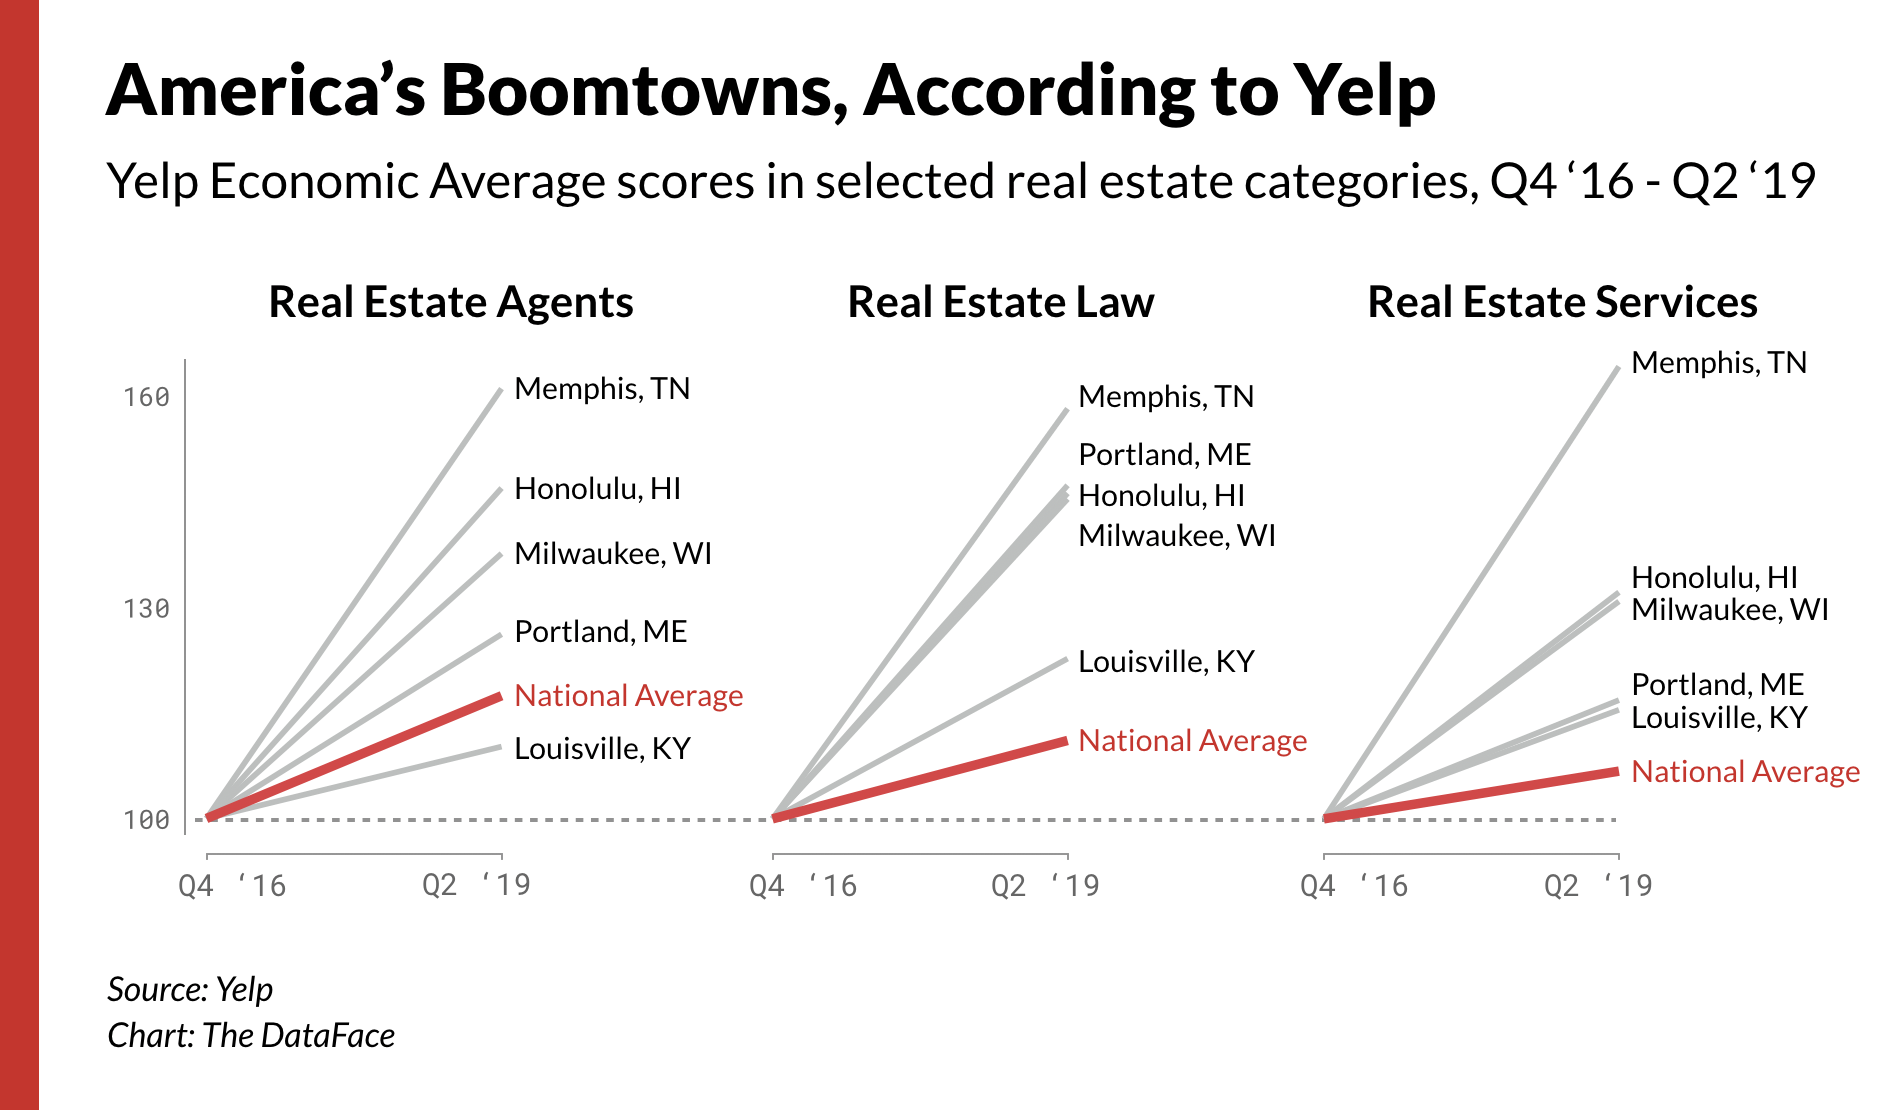 根据Yelp的说法，美国的Boomtowns